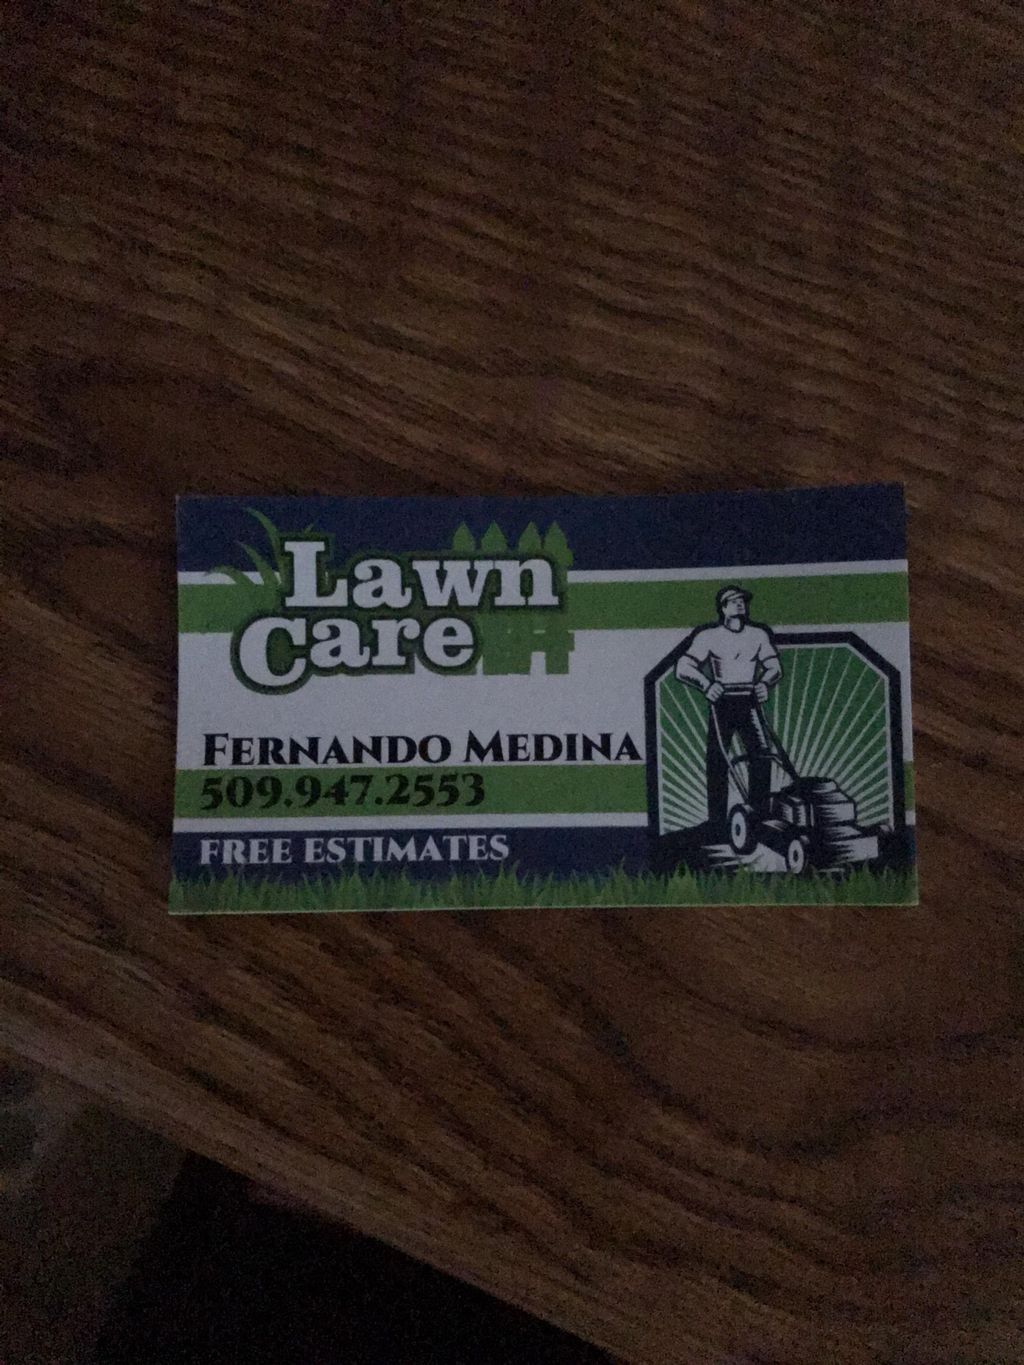 Medina’s Lawn Care